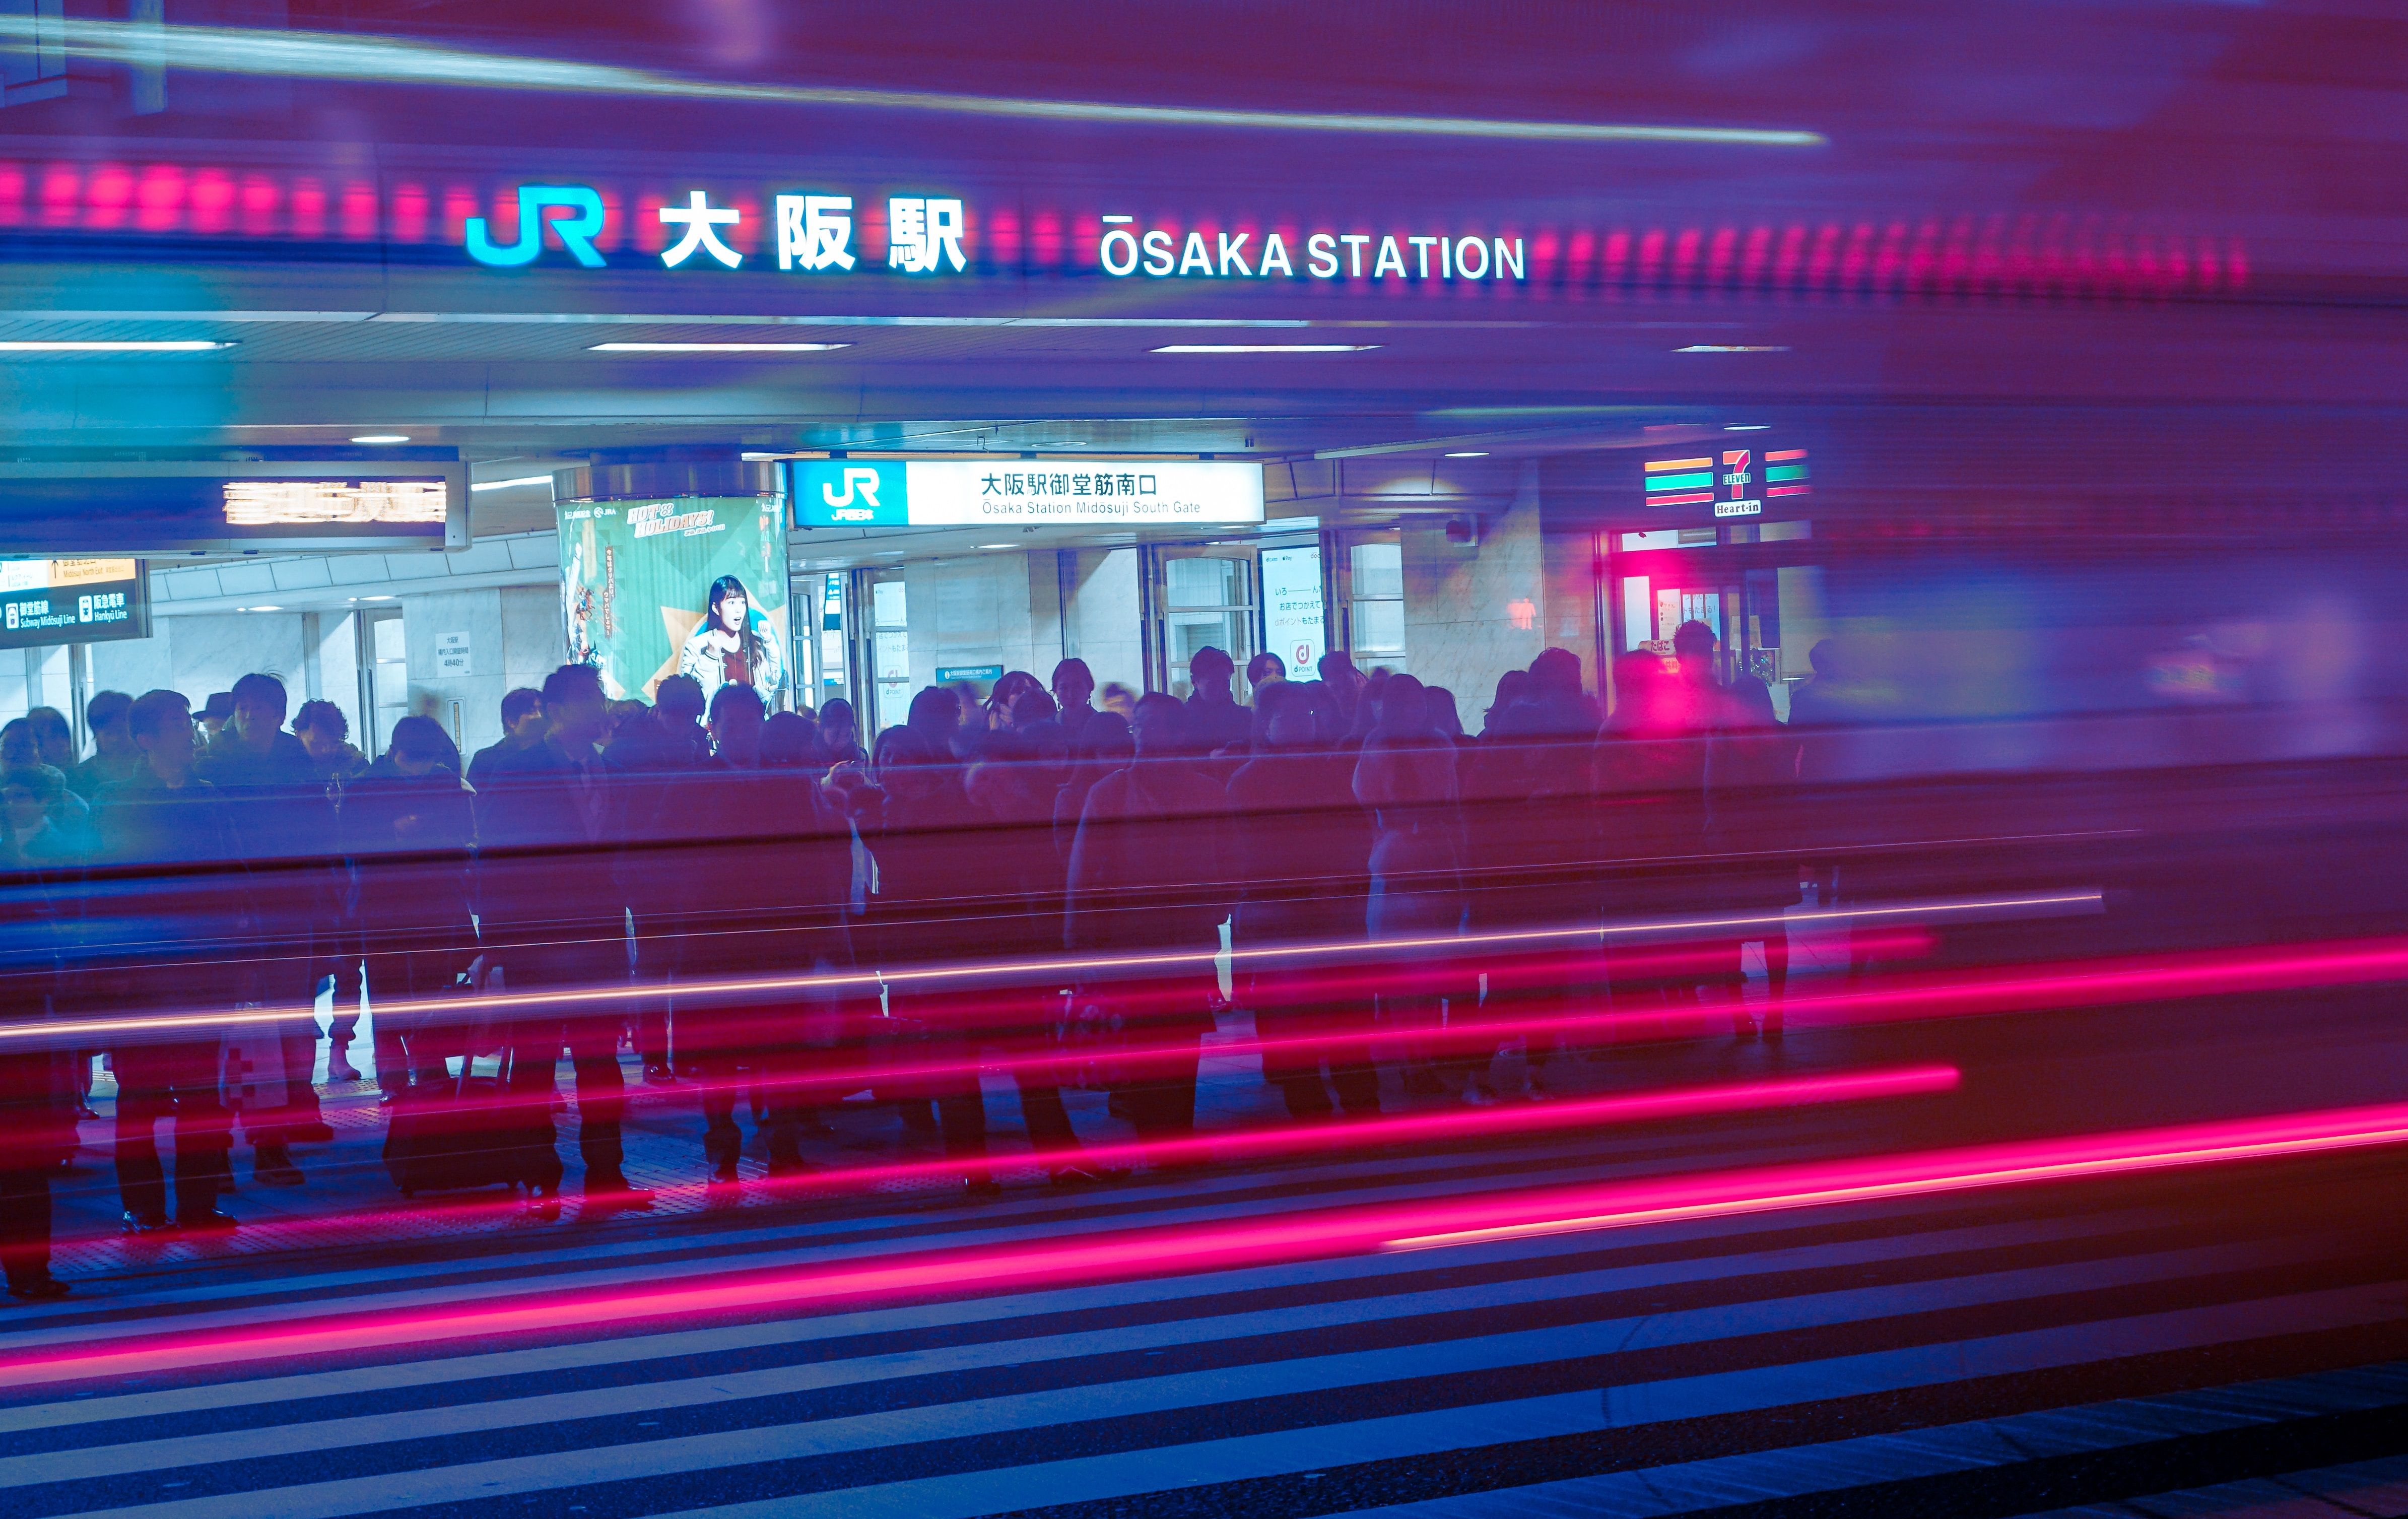 Osaka Train Station in Osaka